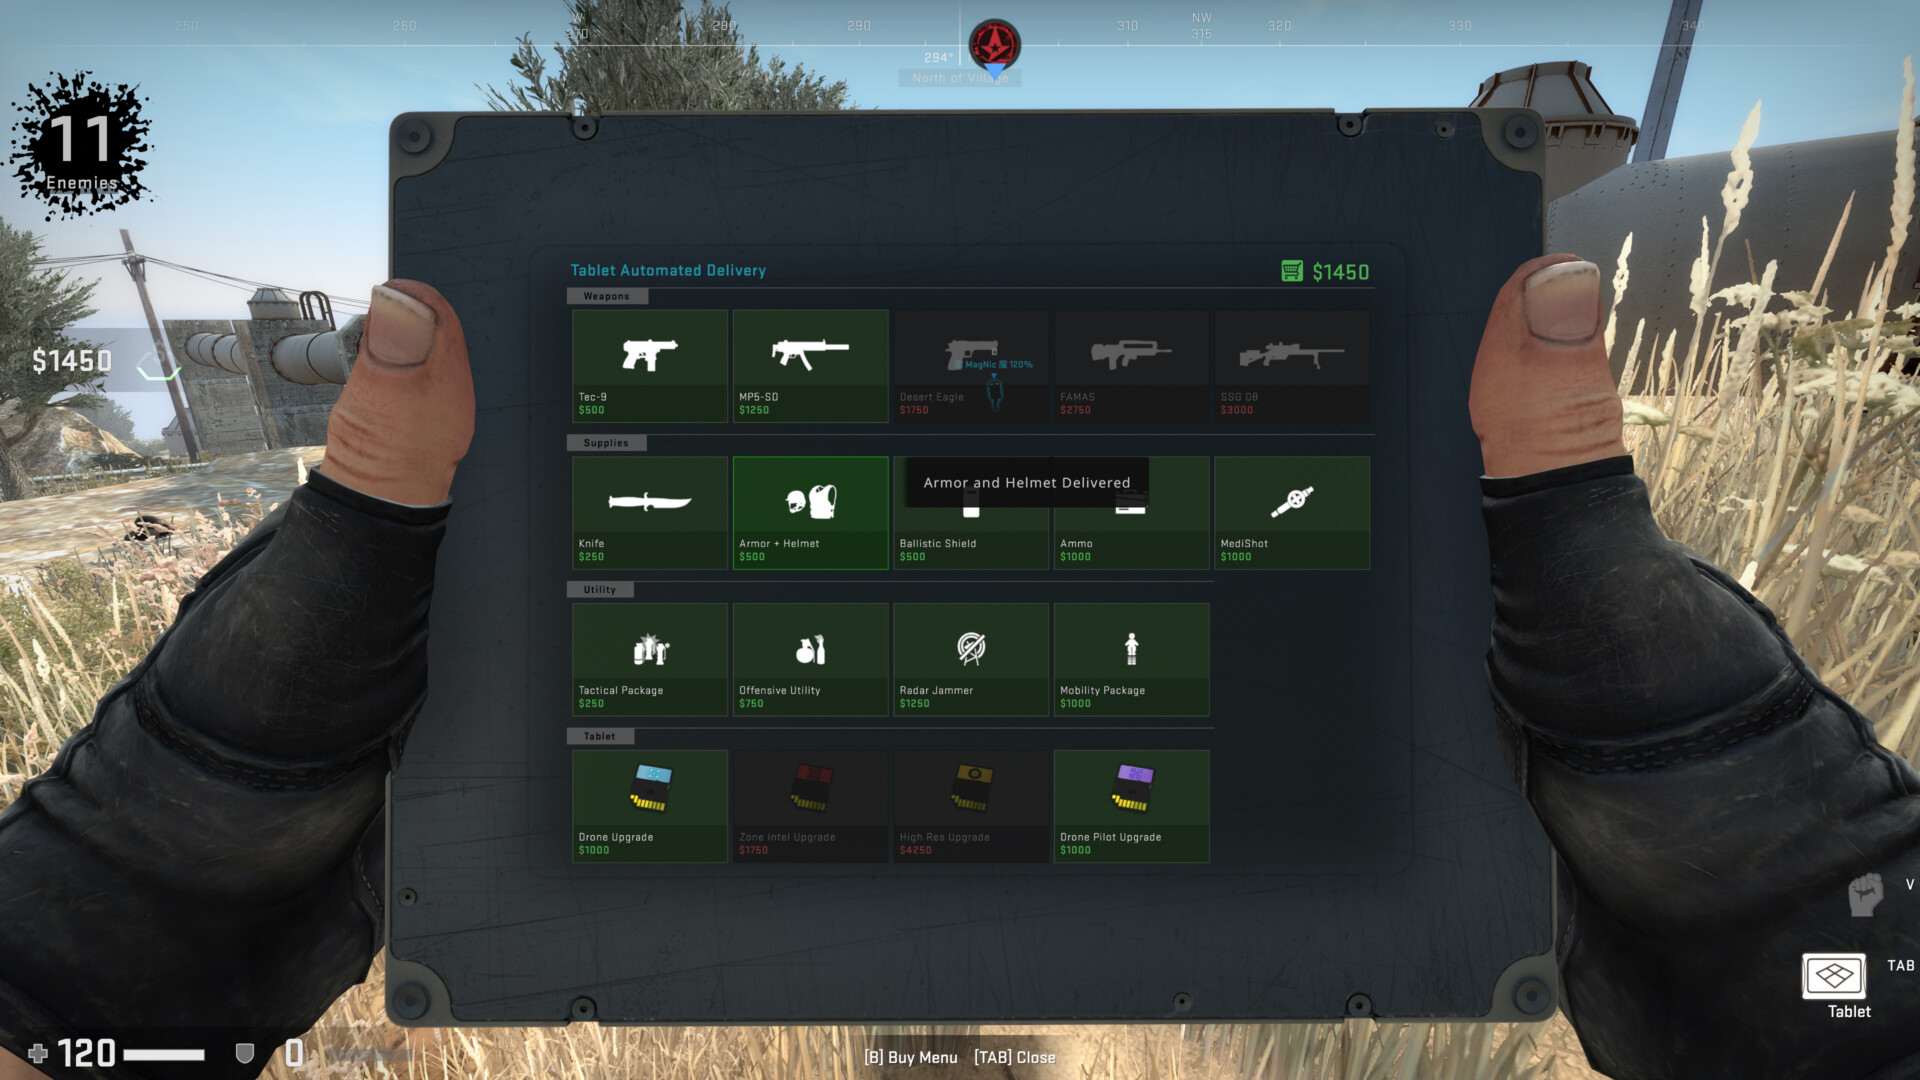 Buy menu screenshot of Counter-Strike: Global Offensive video game interface.